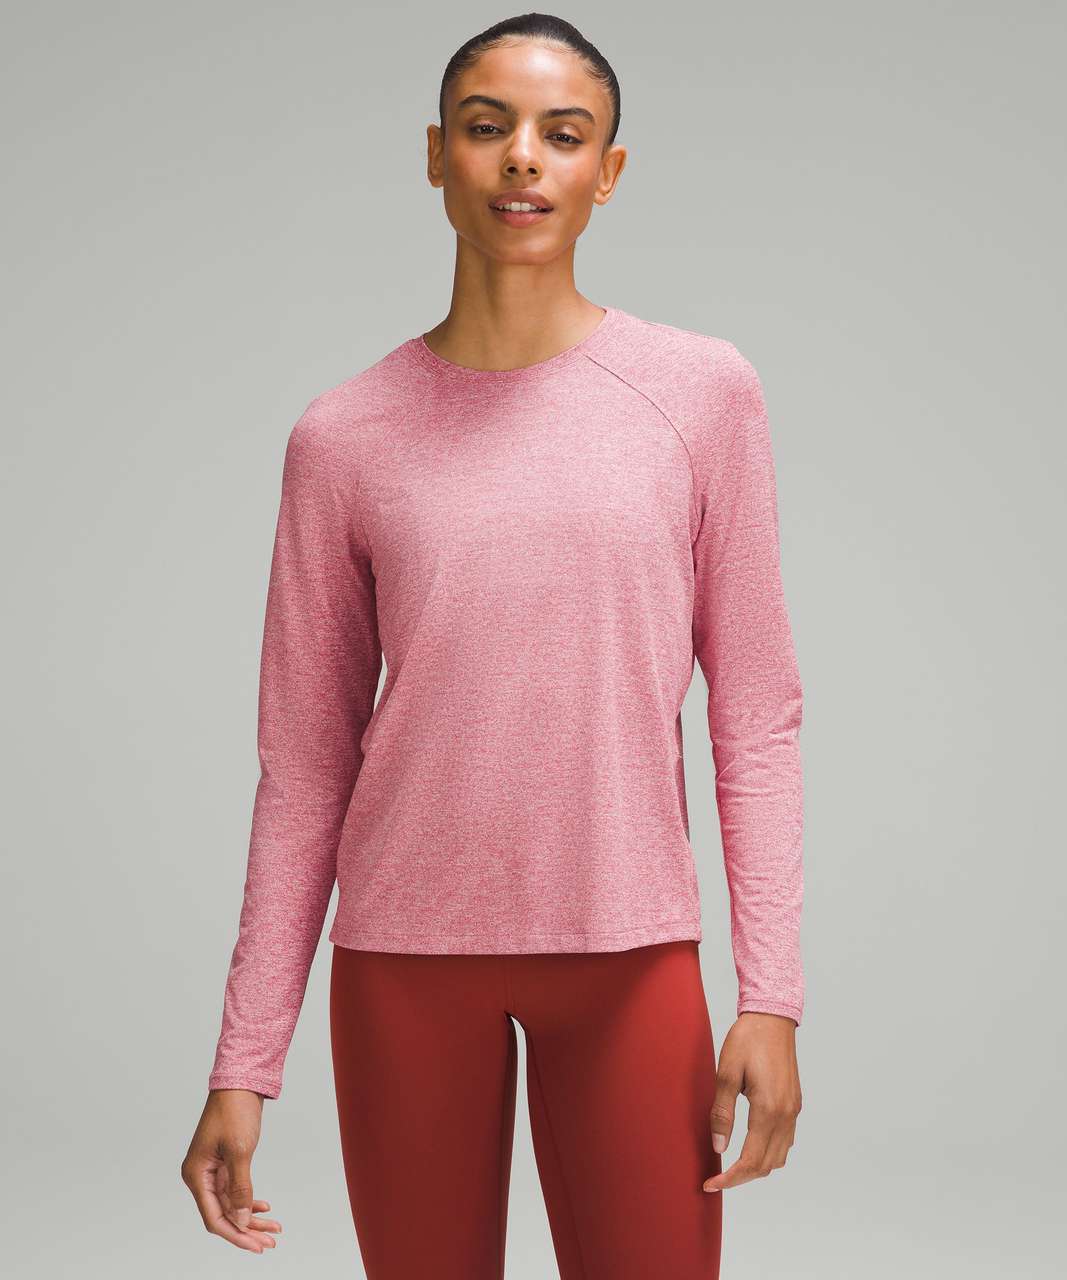 Lululemon License to Train Classic-Fit Long-Sleeve Shirt - Heathered Vintage Rose